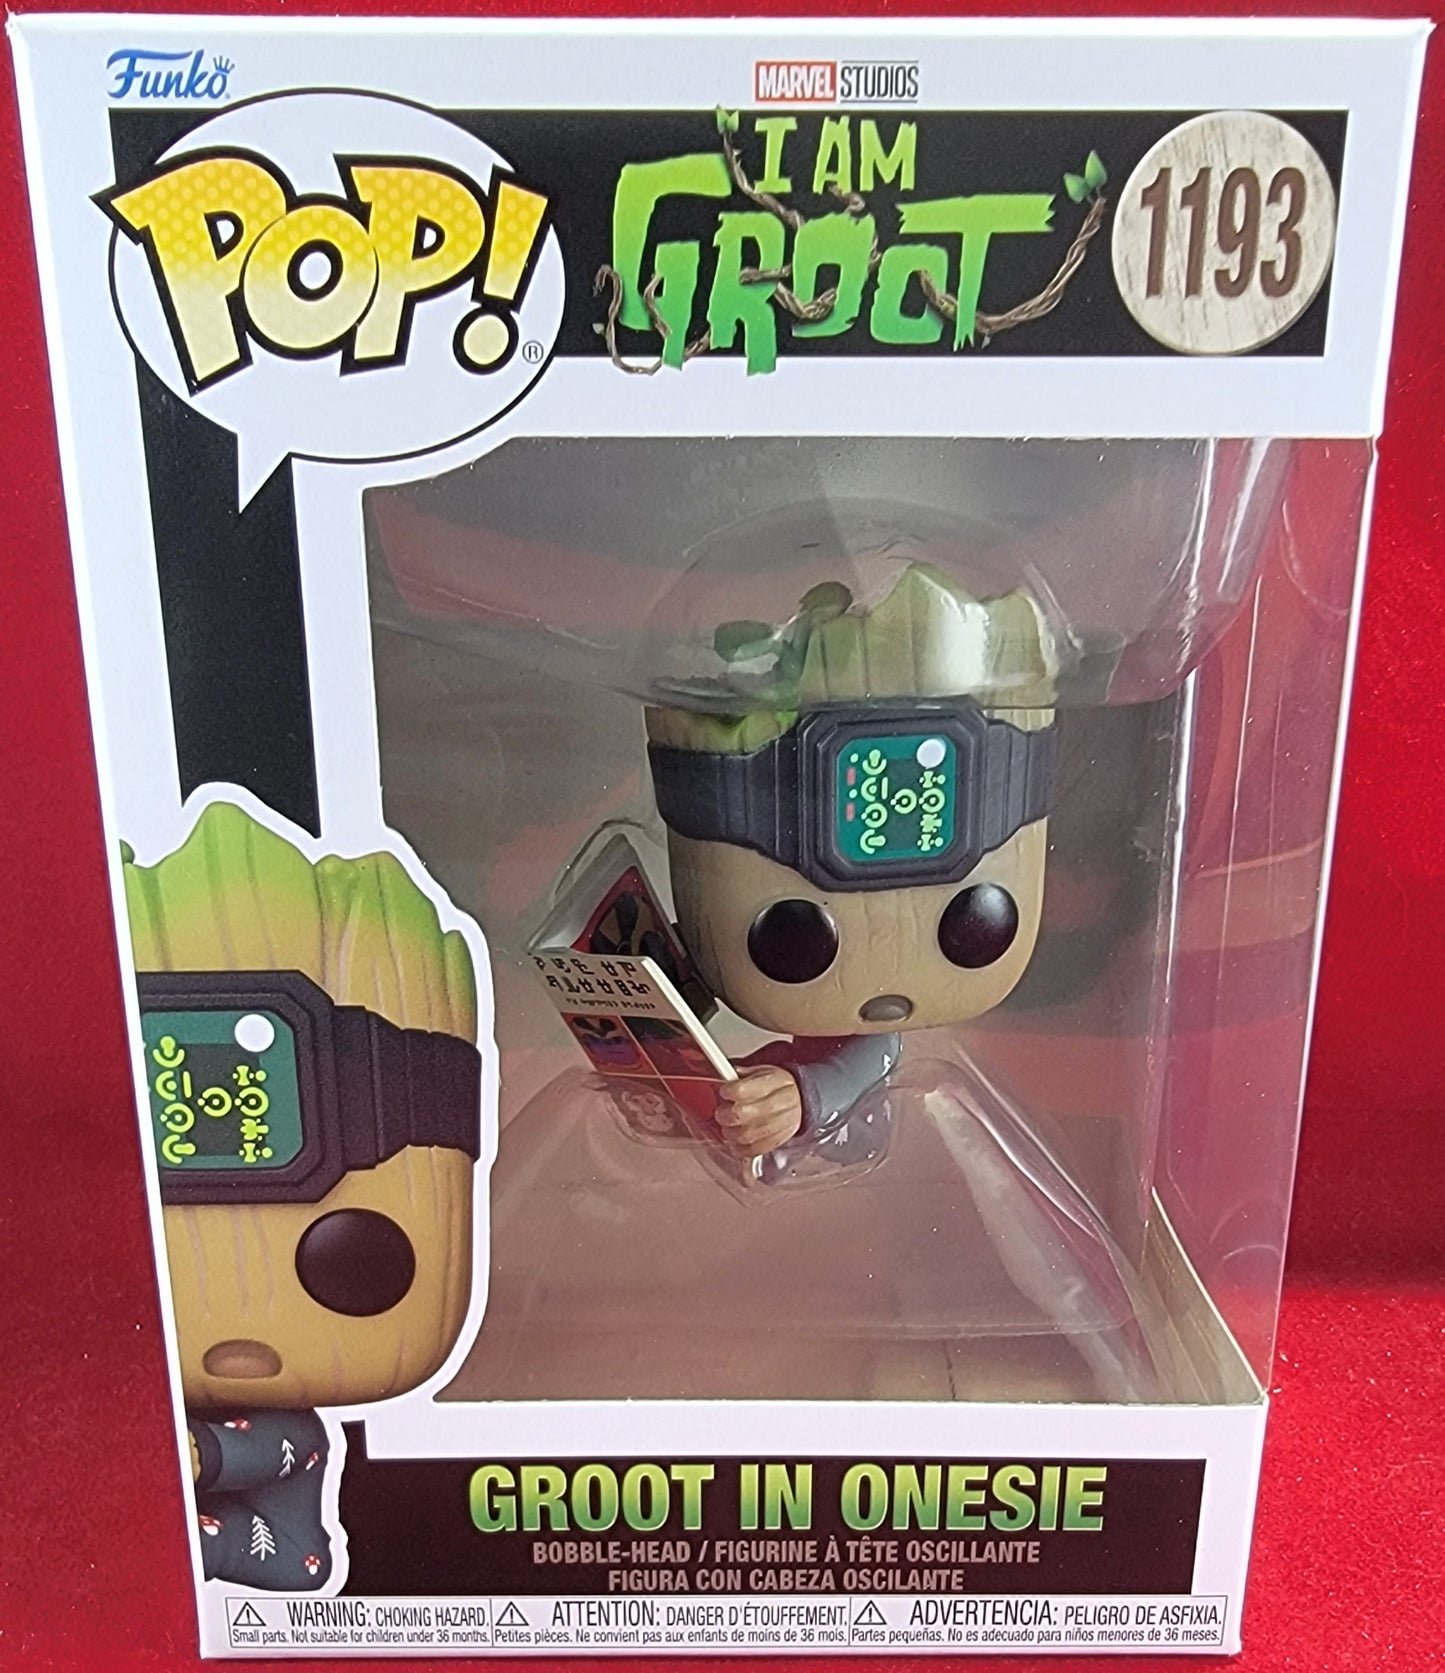 Groot in a onesie funko # 1193 (nib)
With pop protector